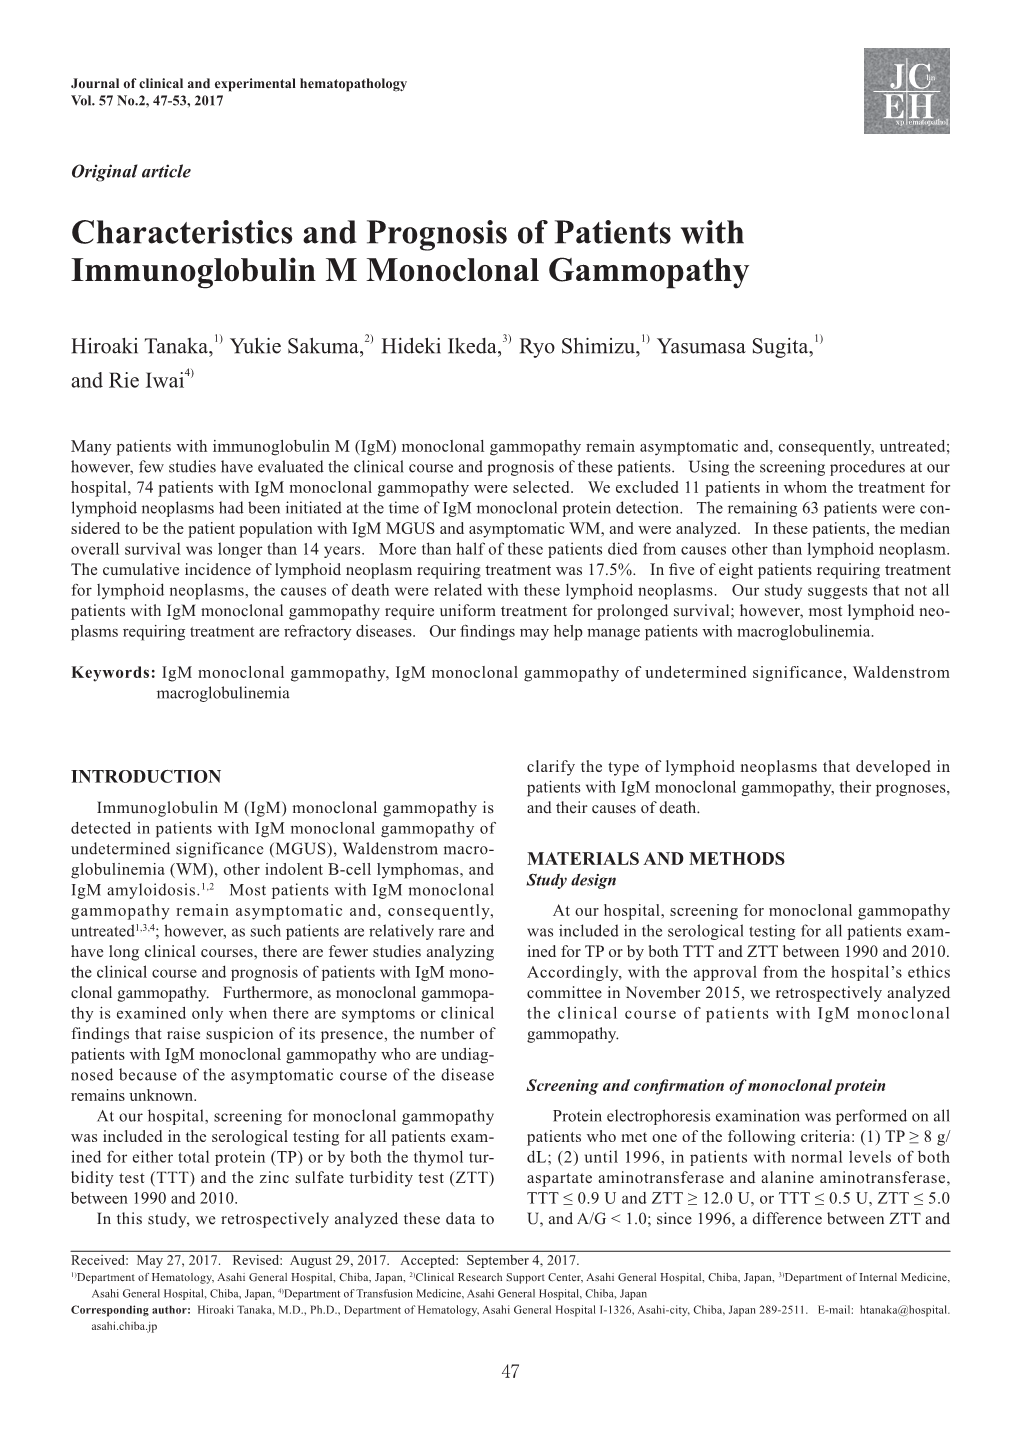 Characteristics and Prognosis of Patients with Immunoglobulin M Monoclonal Gammopathy